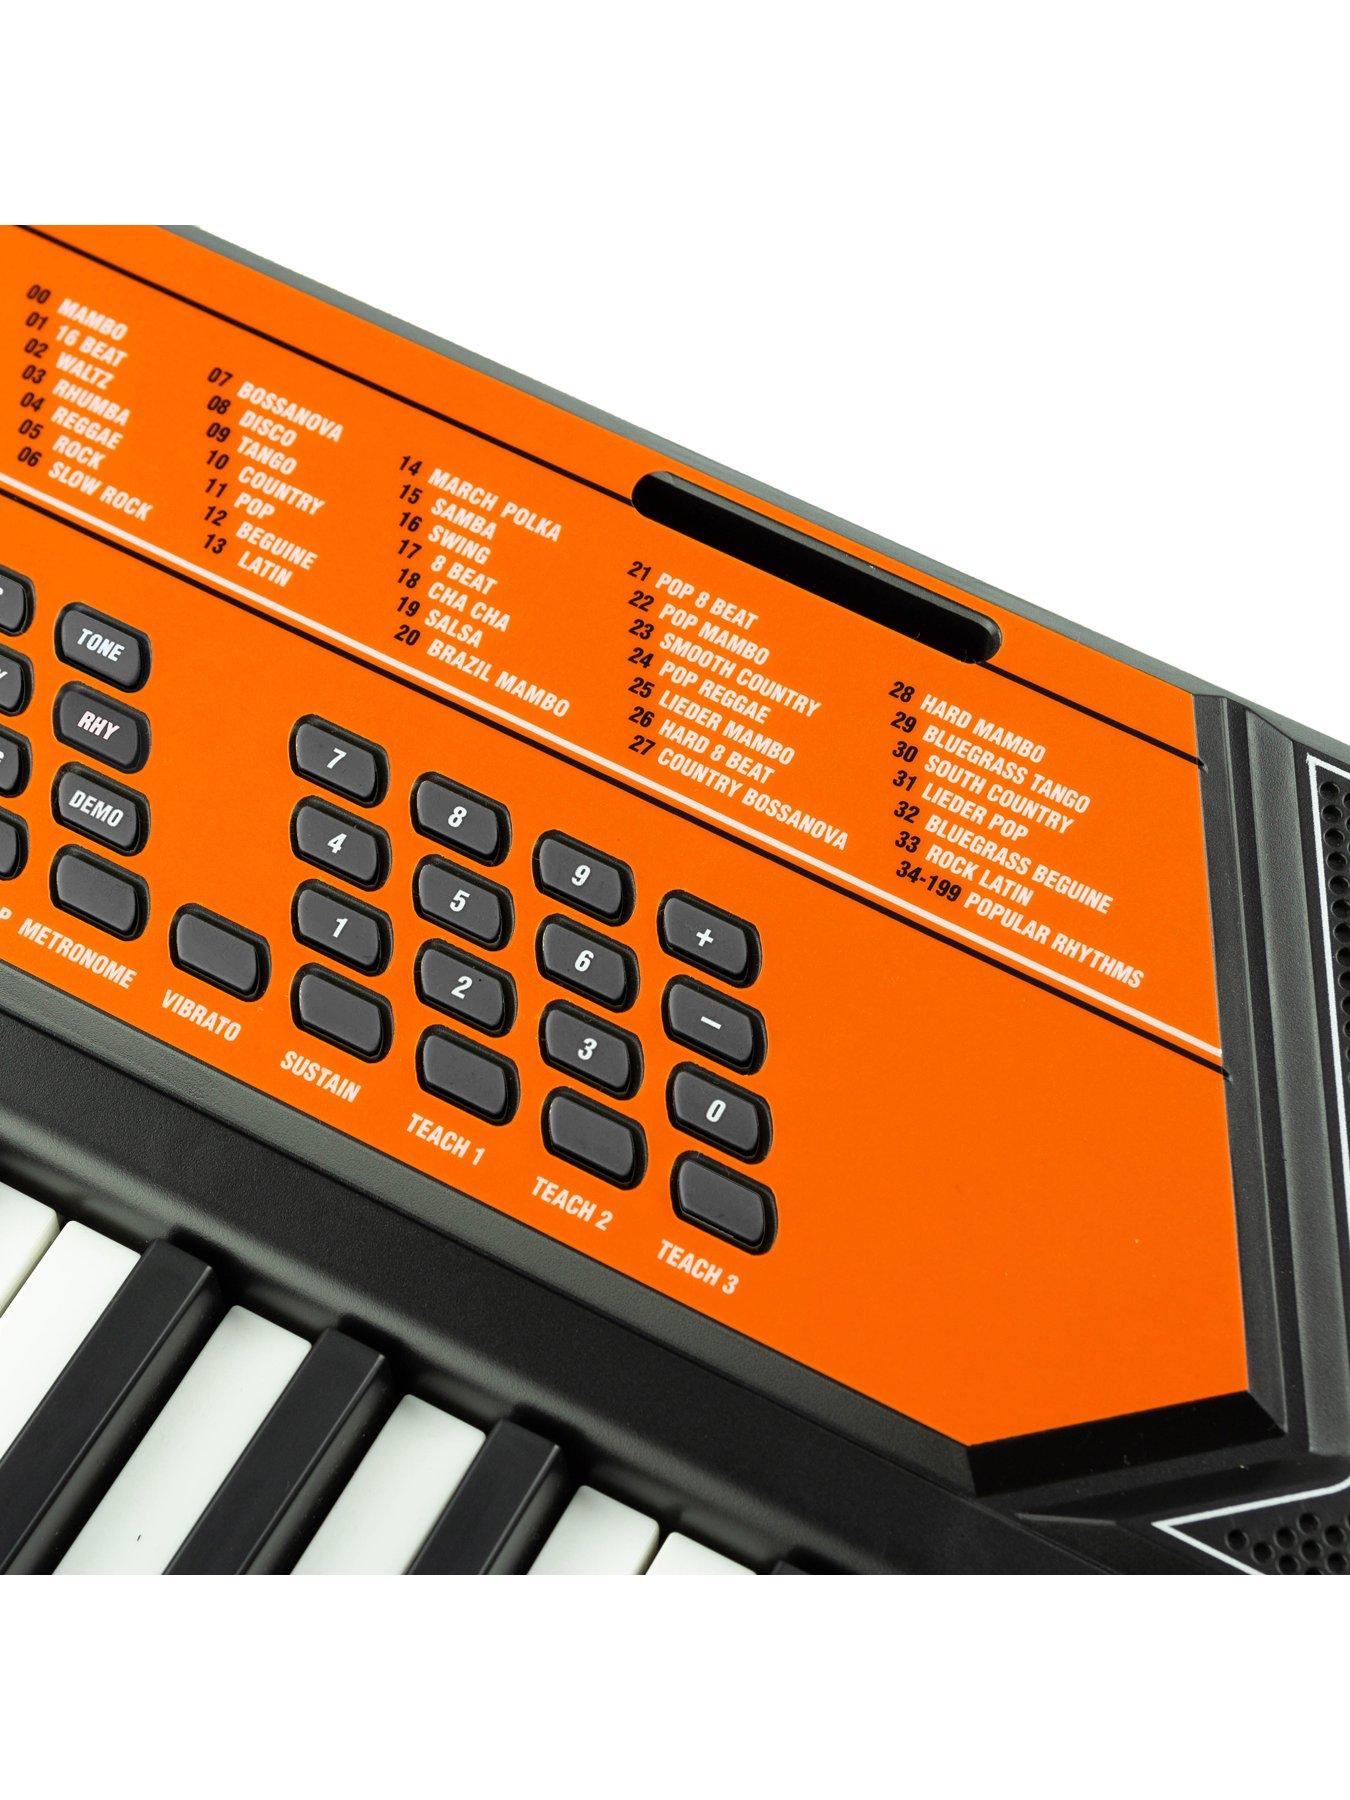 61 Keys Electronic Keyboard Piano w/Stand Stool Microphone Sticker